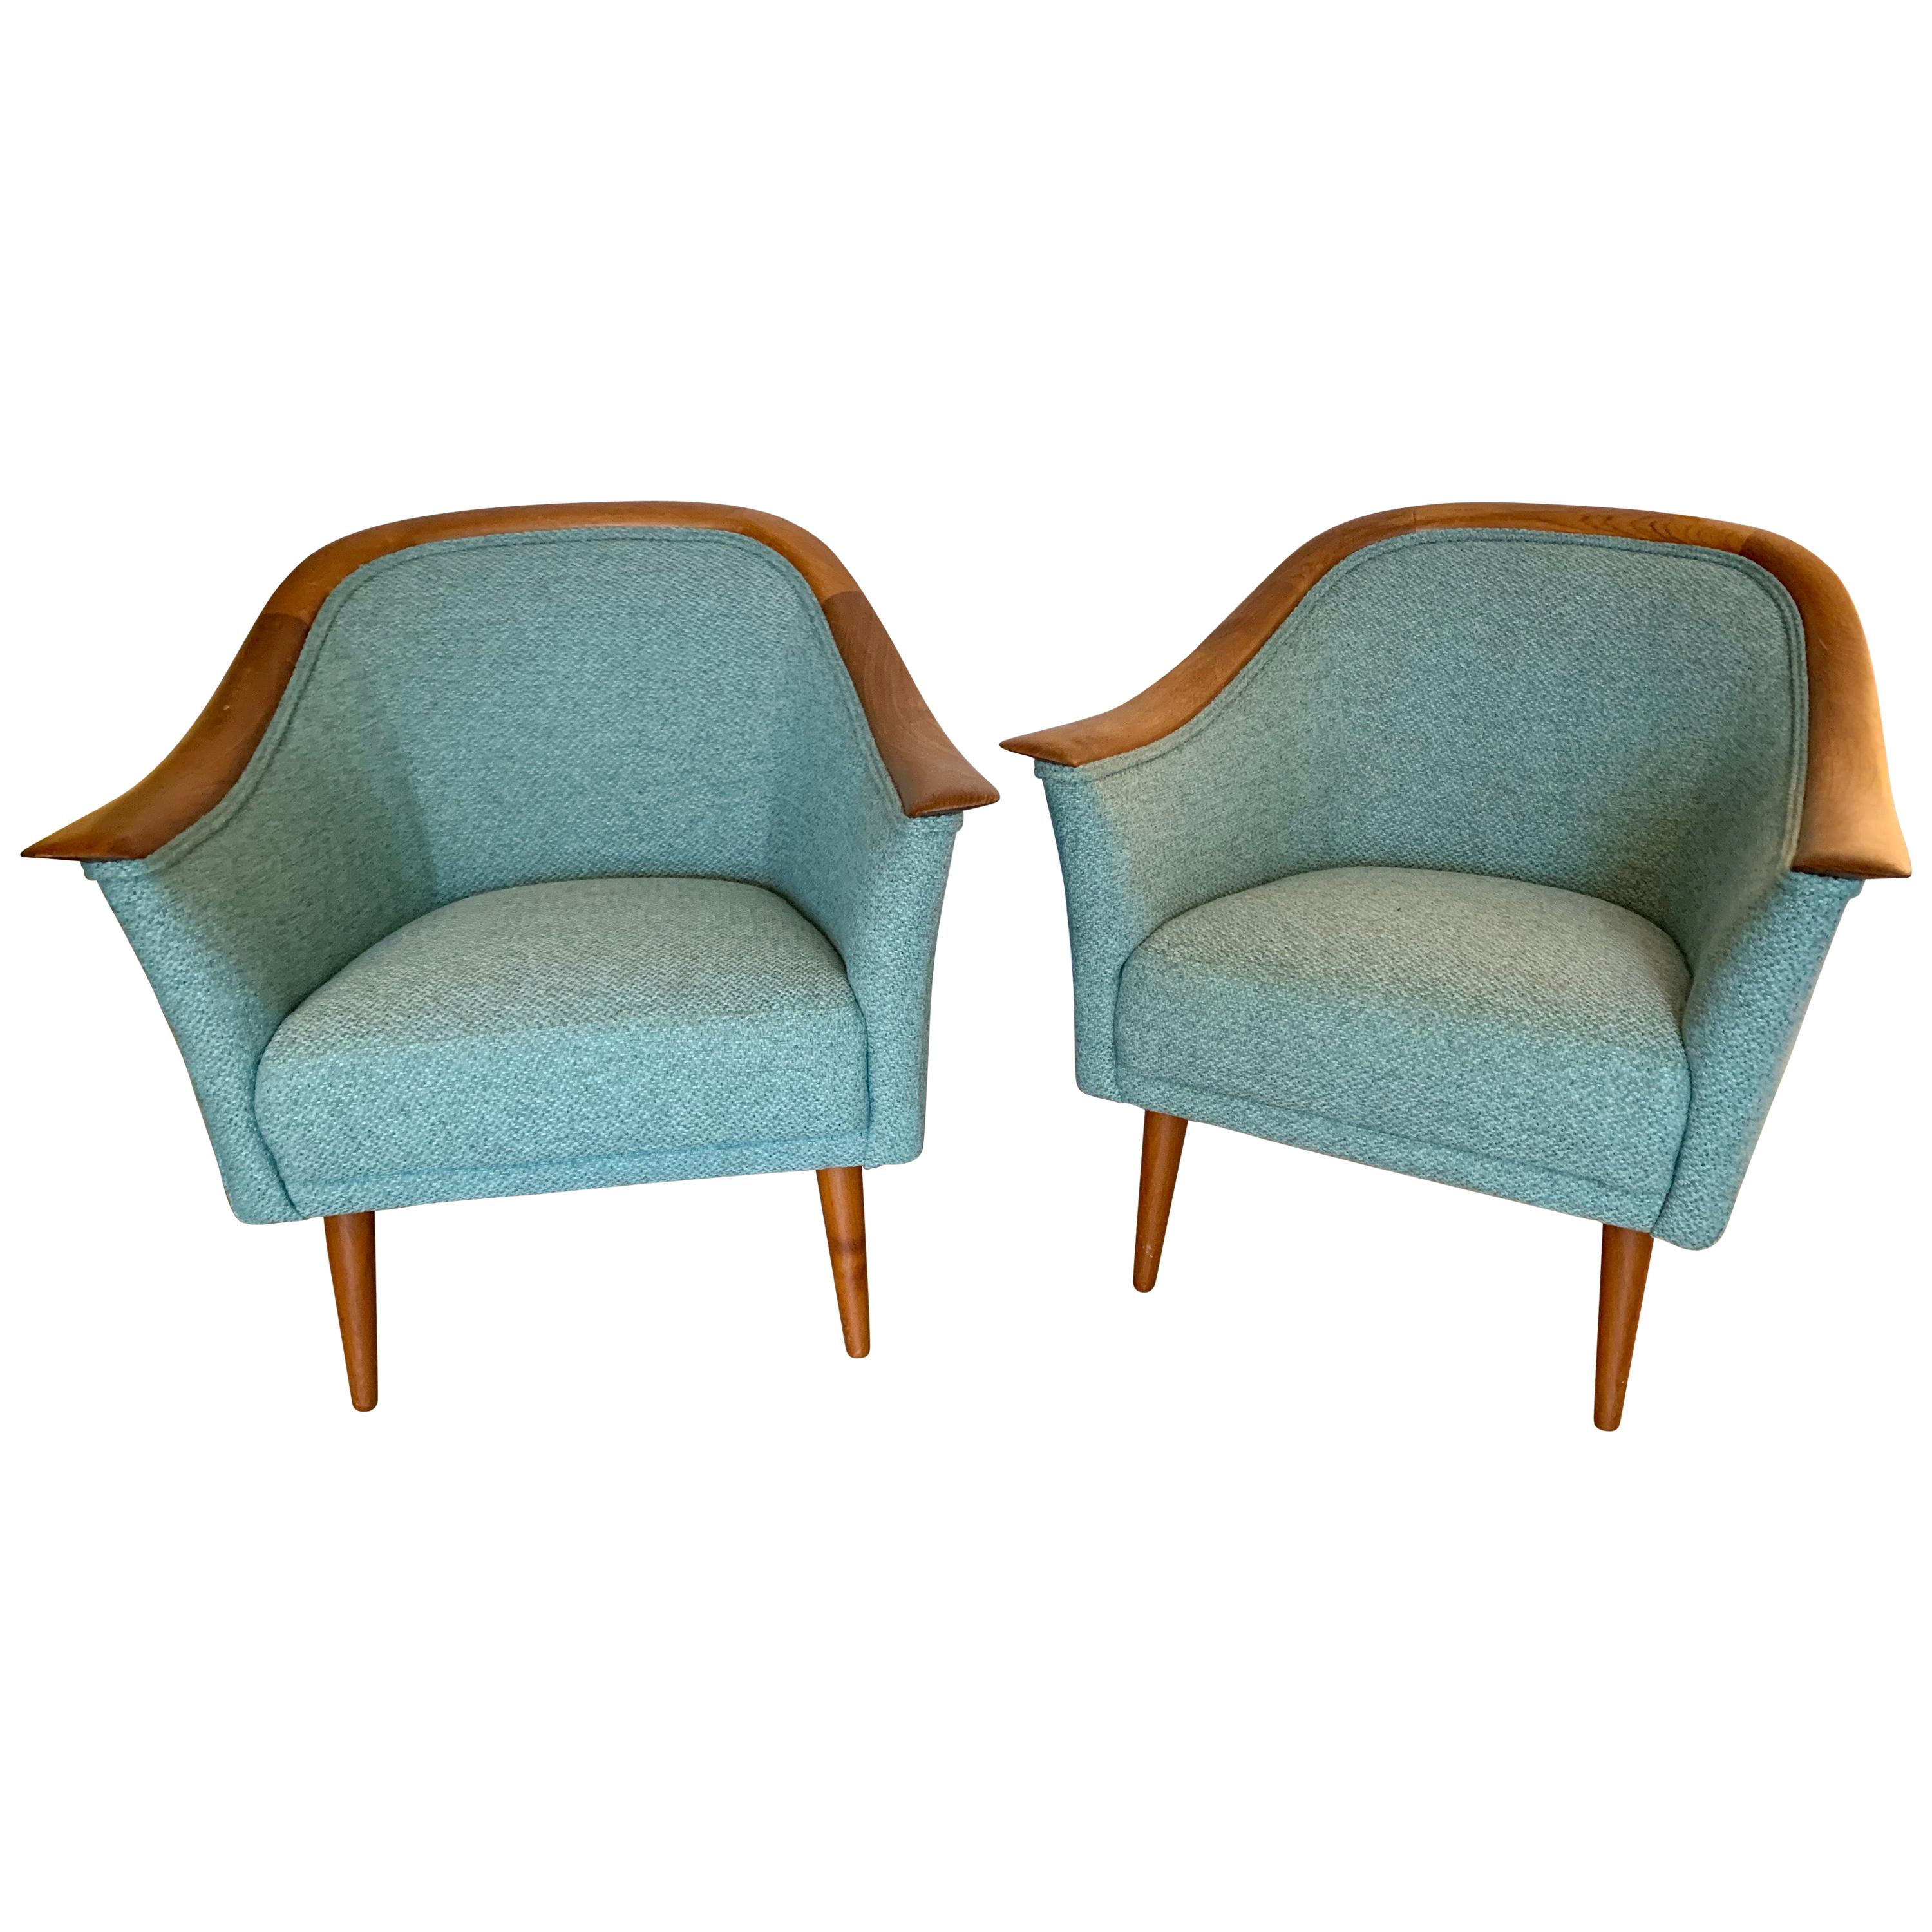 Pair of Mid-Century Modern Teal Seafoam Tweed Newly Upholstered Walnut Armchairs